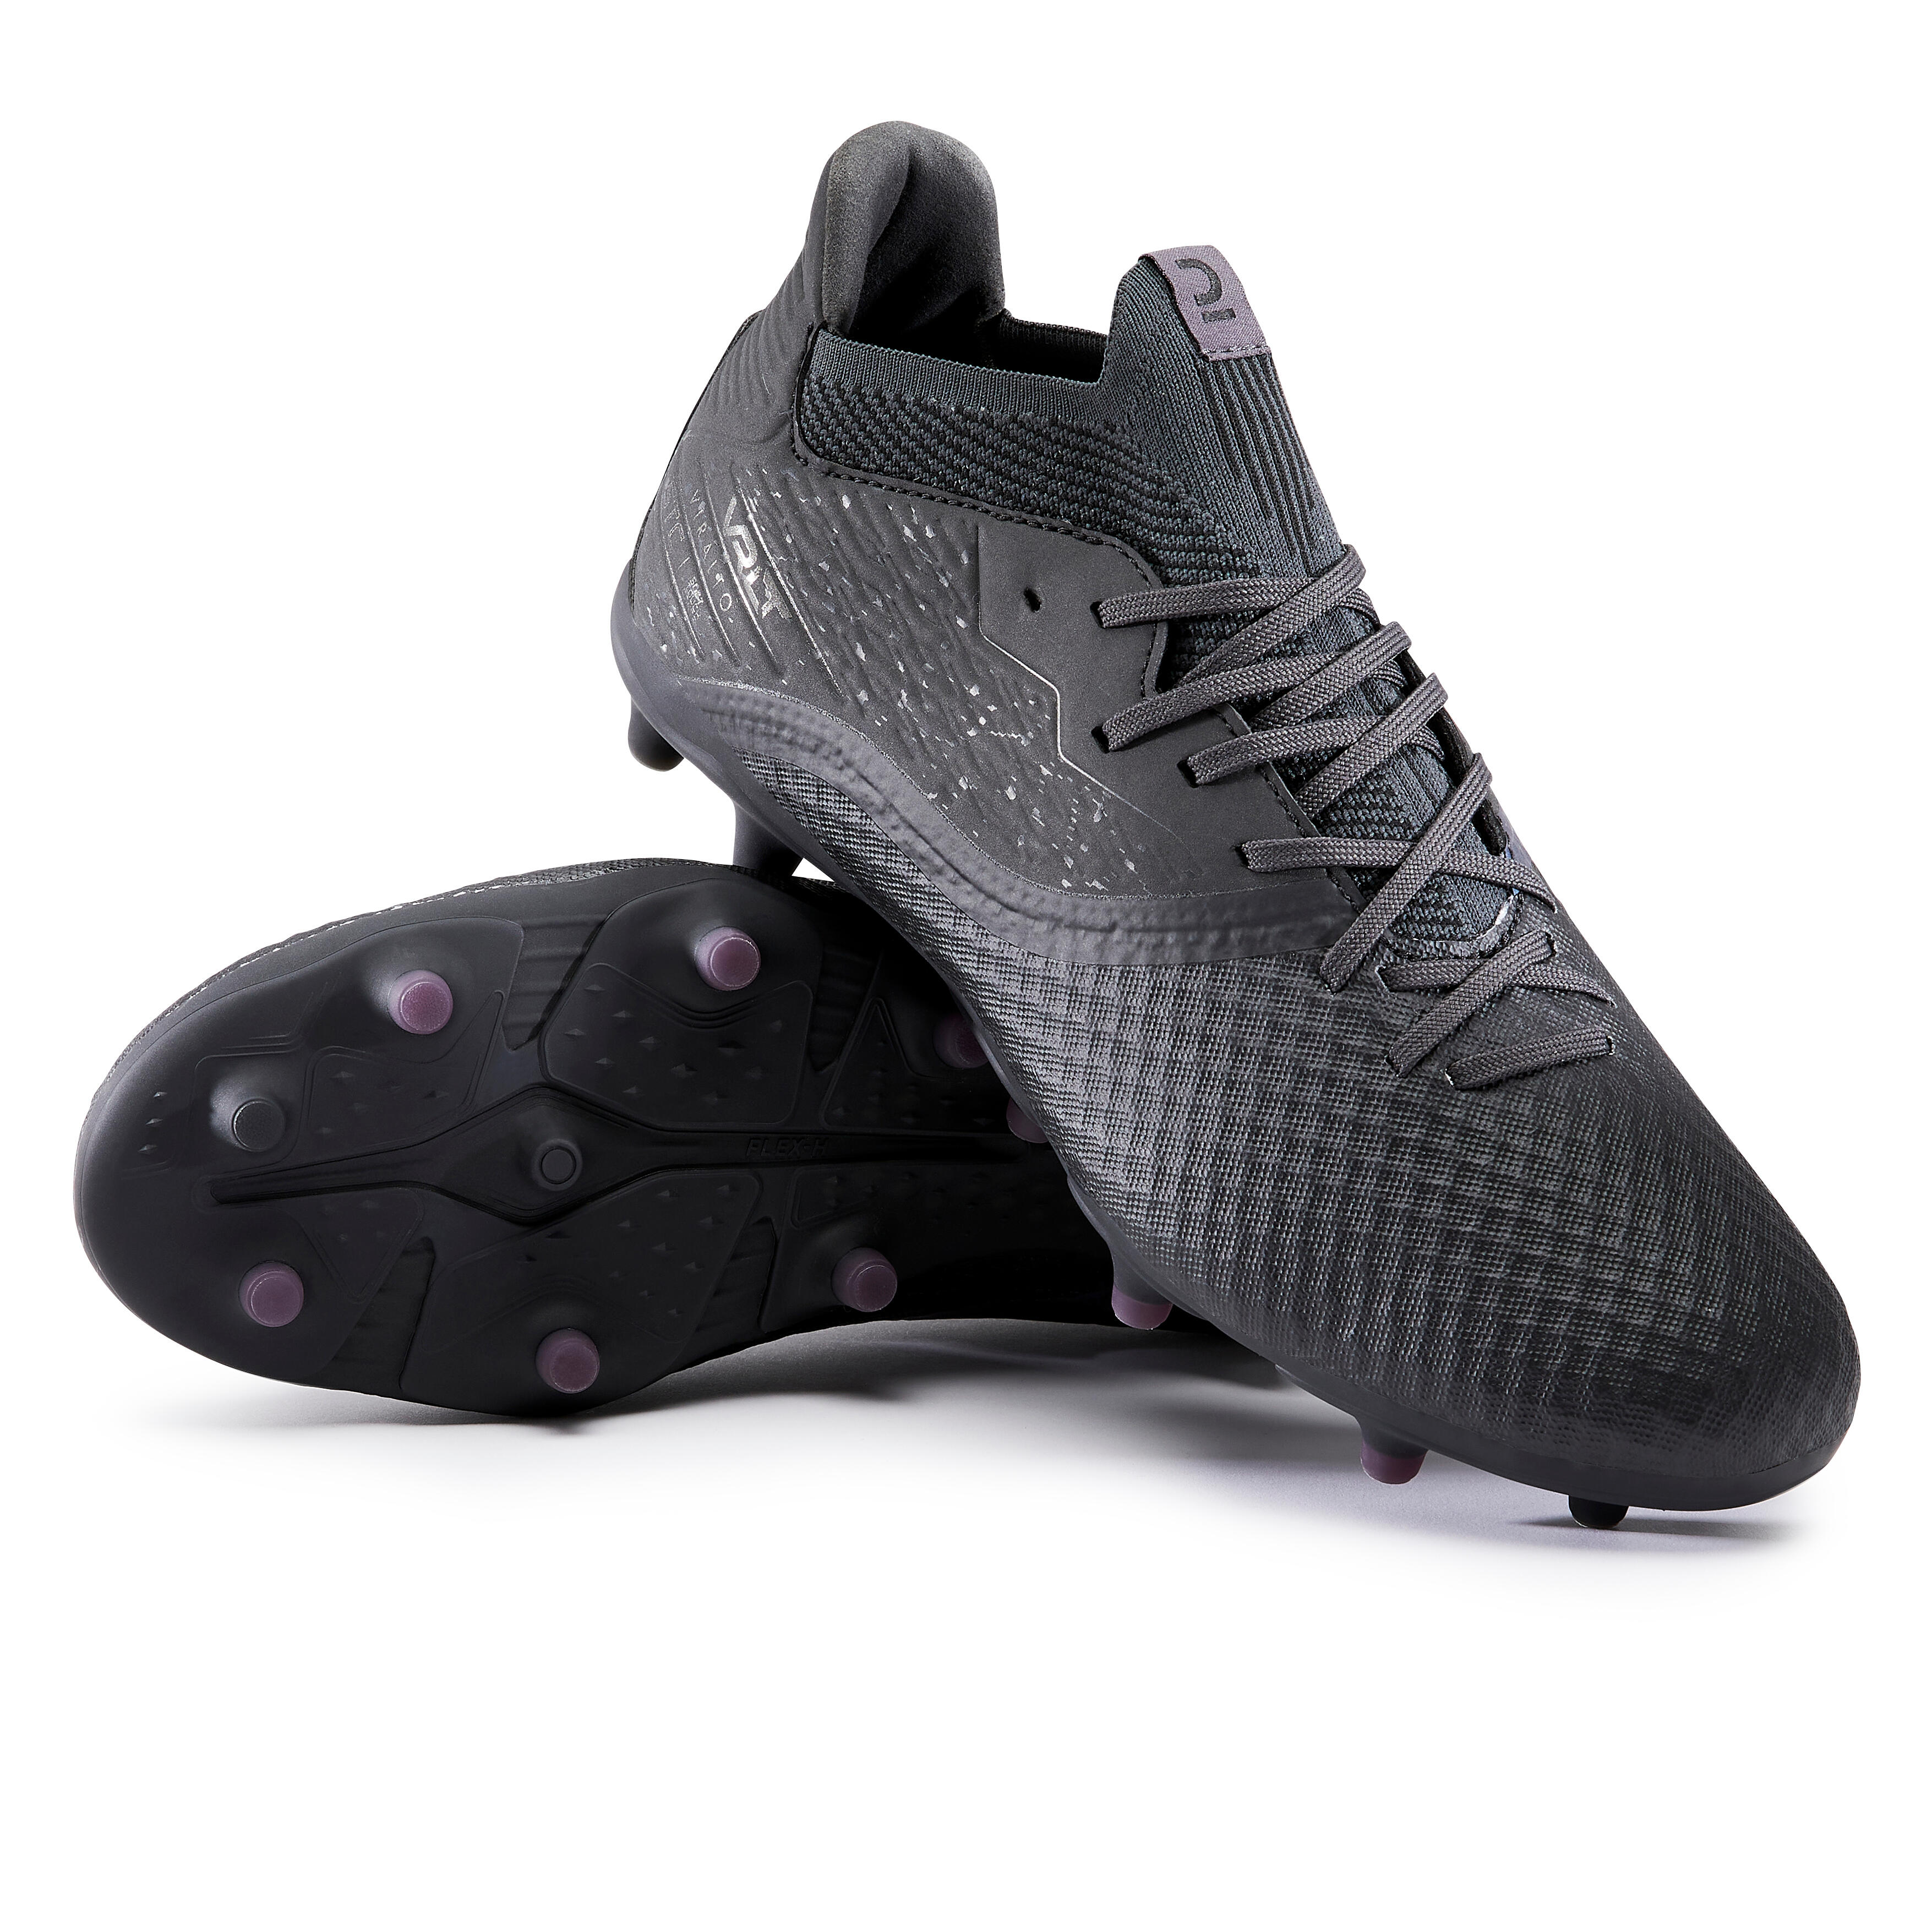 Men's Soccer Cleats - Viralto III Grey/Black - smoked black, Carbon ...